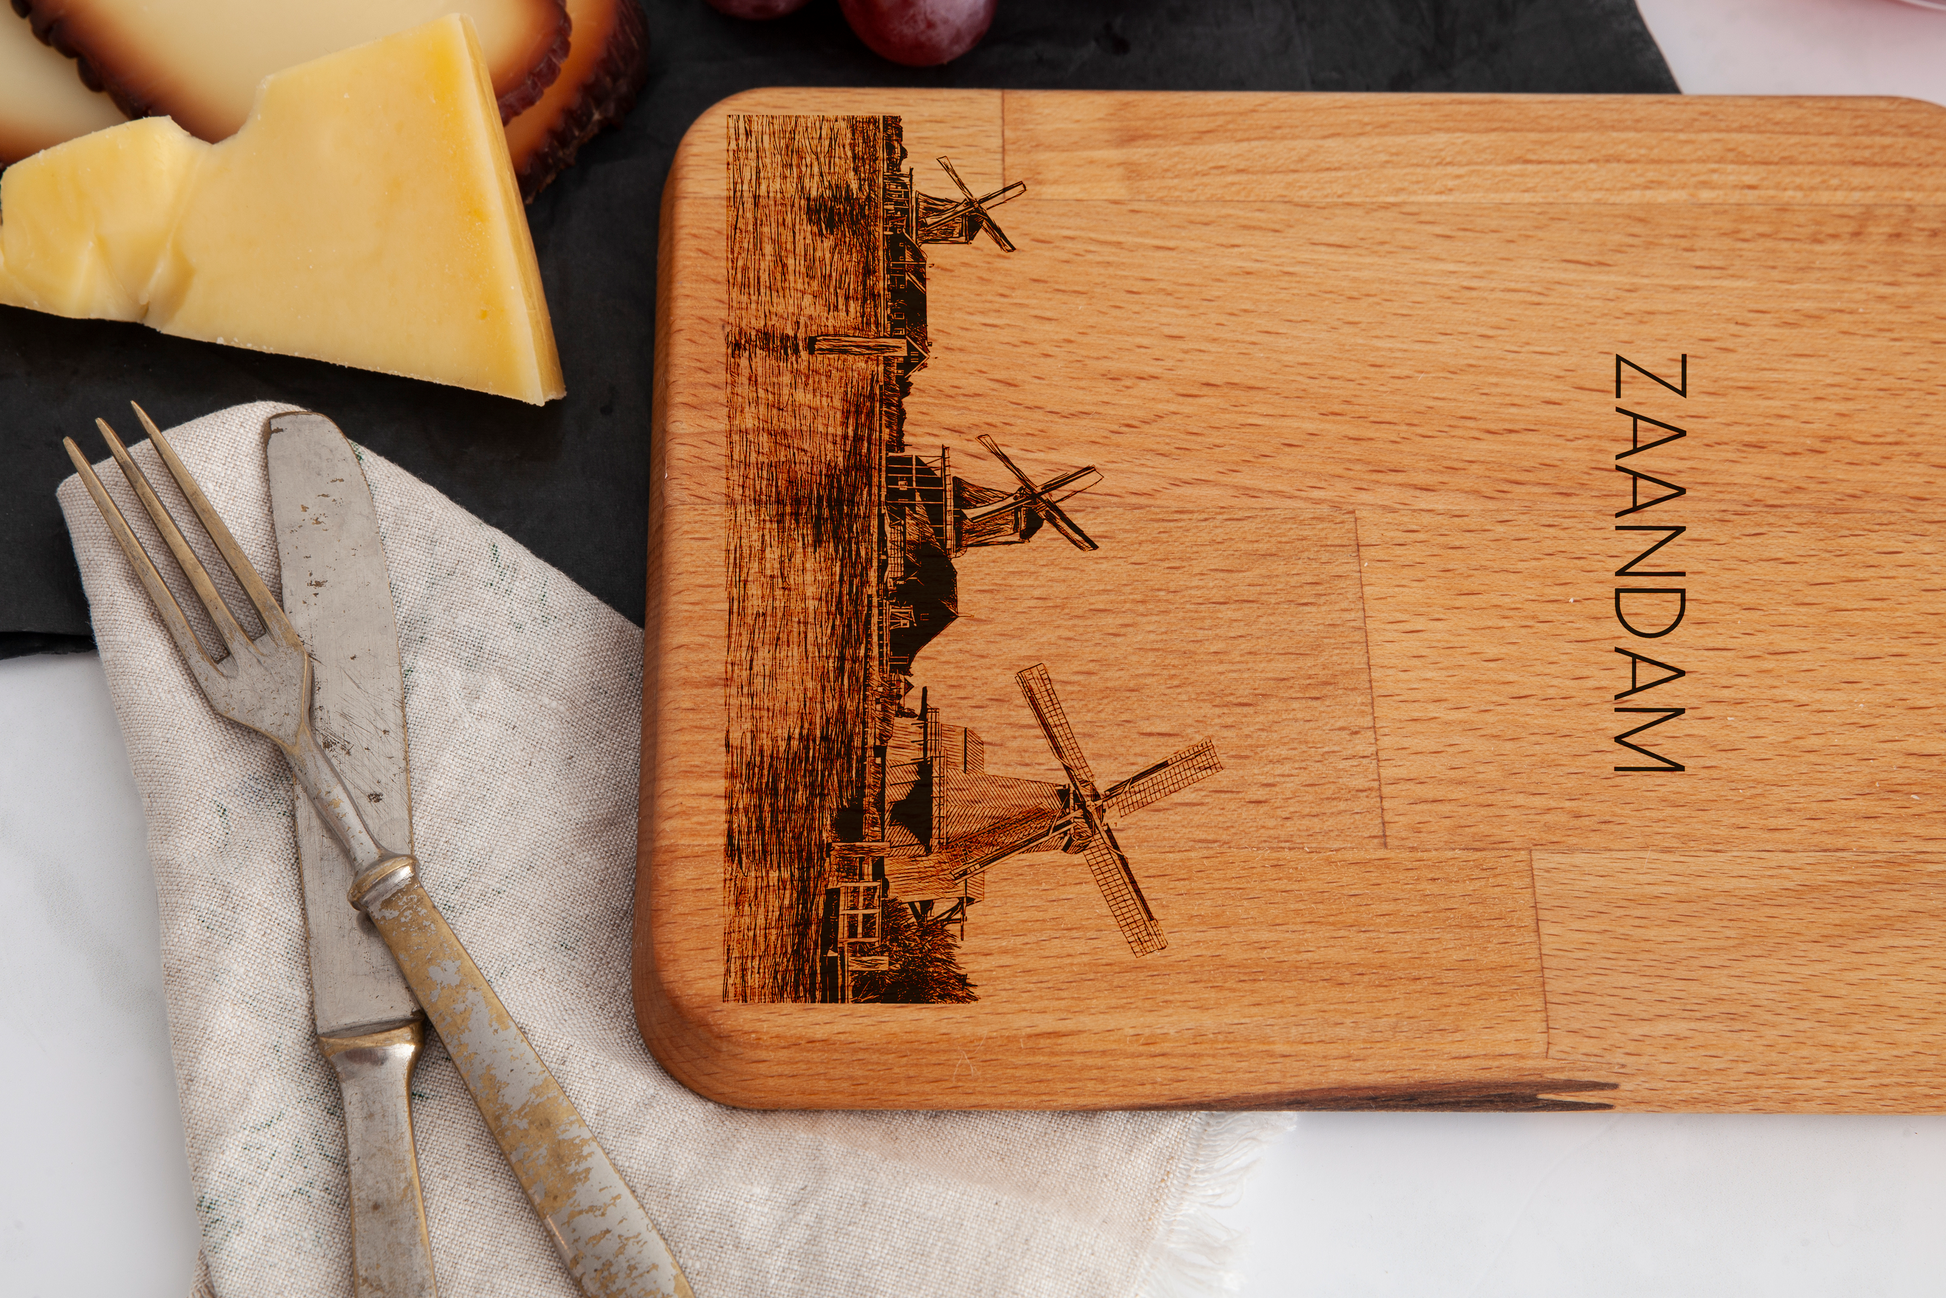 Zaandam, Zaanse Schans, cheese board, wood grain